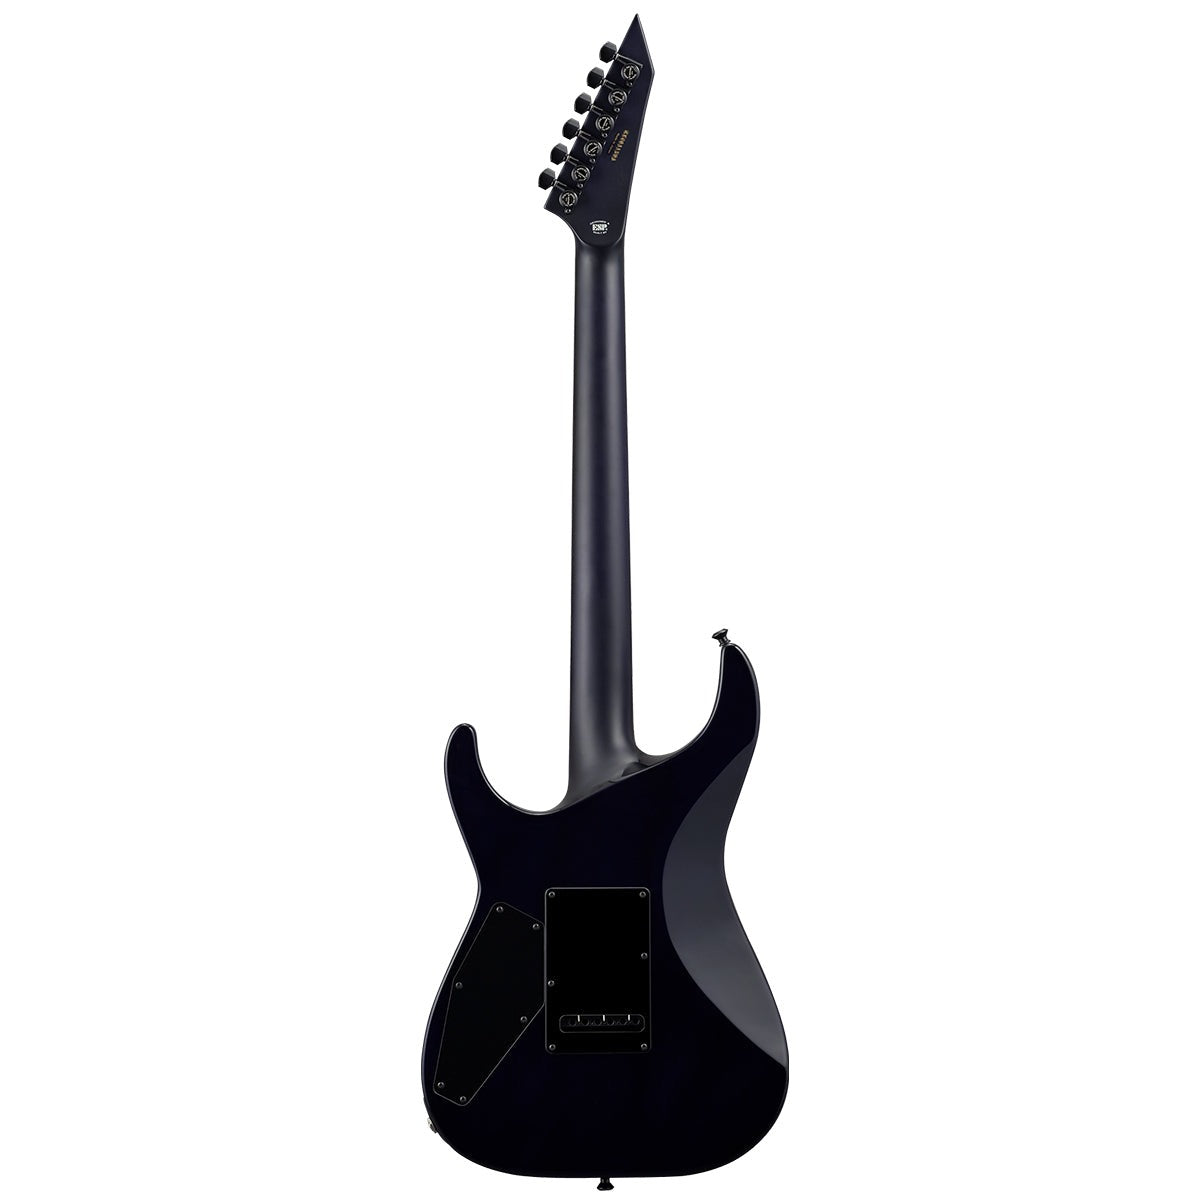 ESP Japan E-II M-II HST QM Electric Guitar - Indigo Purple Fade [MIJ]